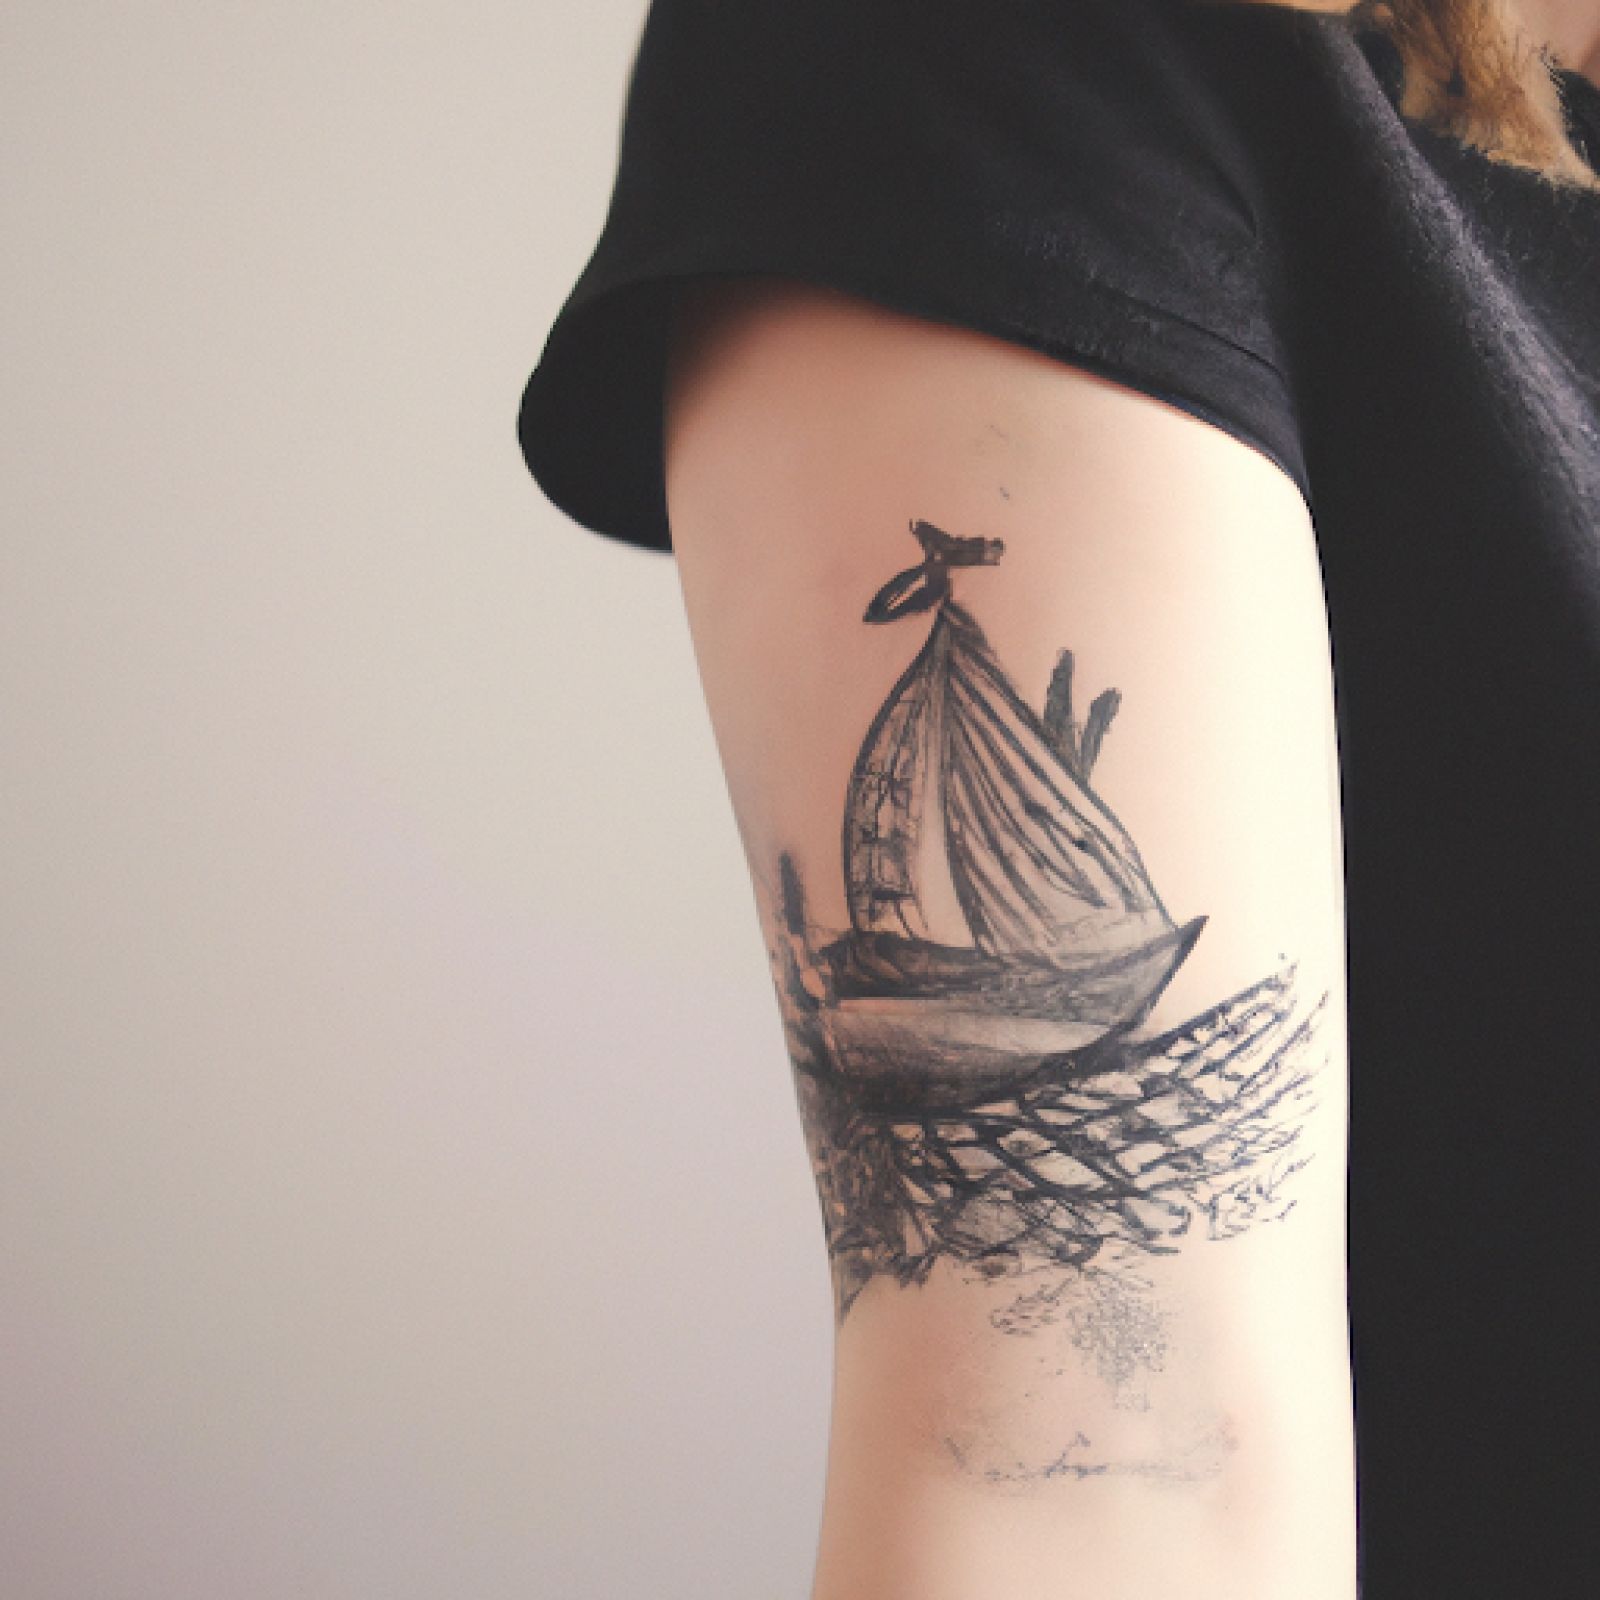 Ship tattoo on half sleeve for women